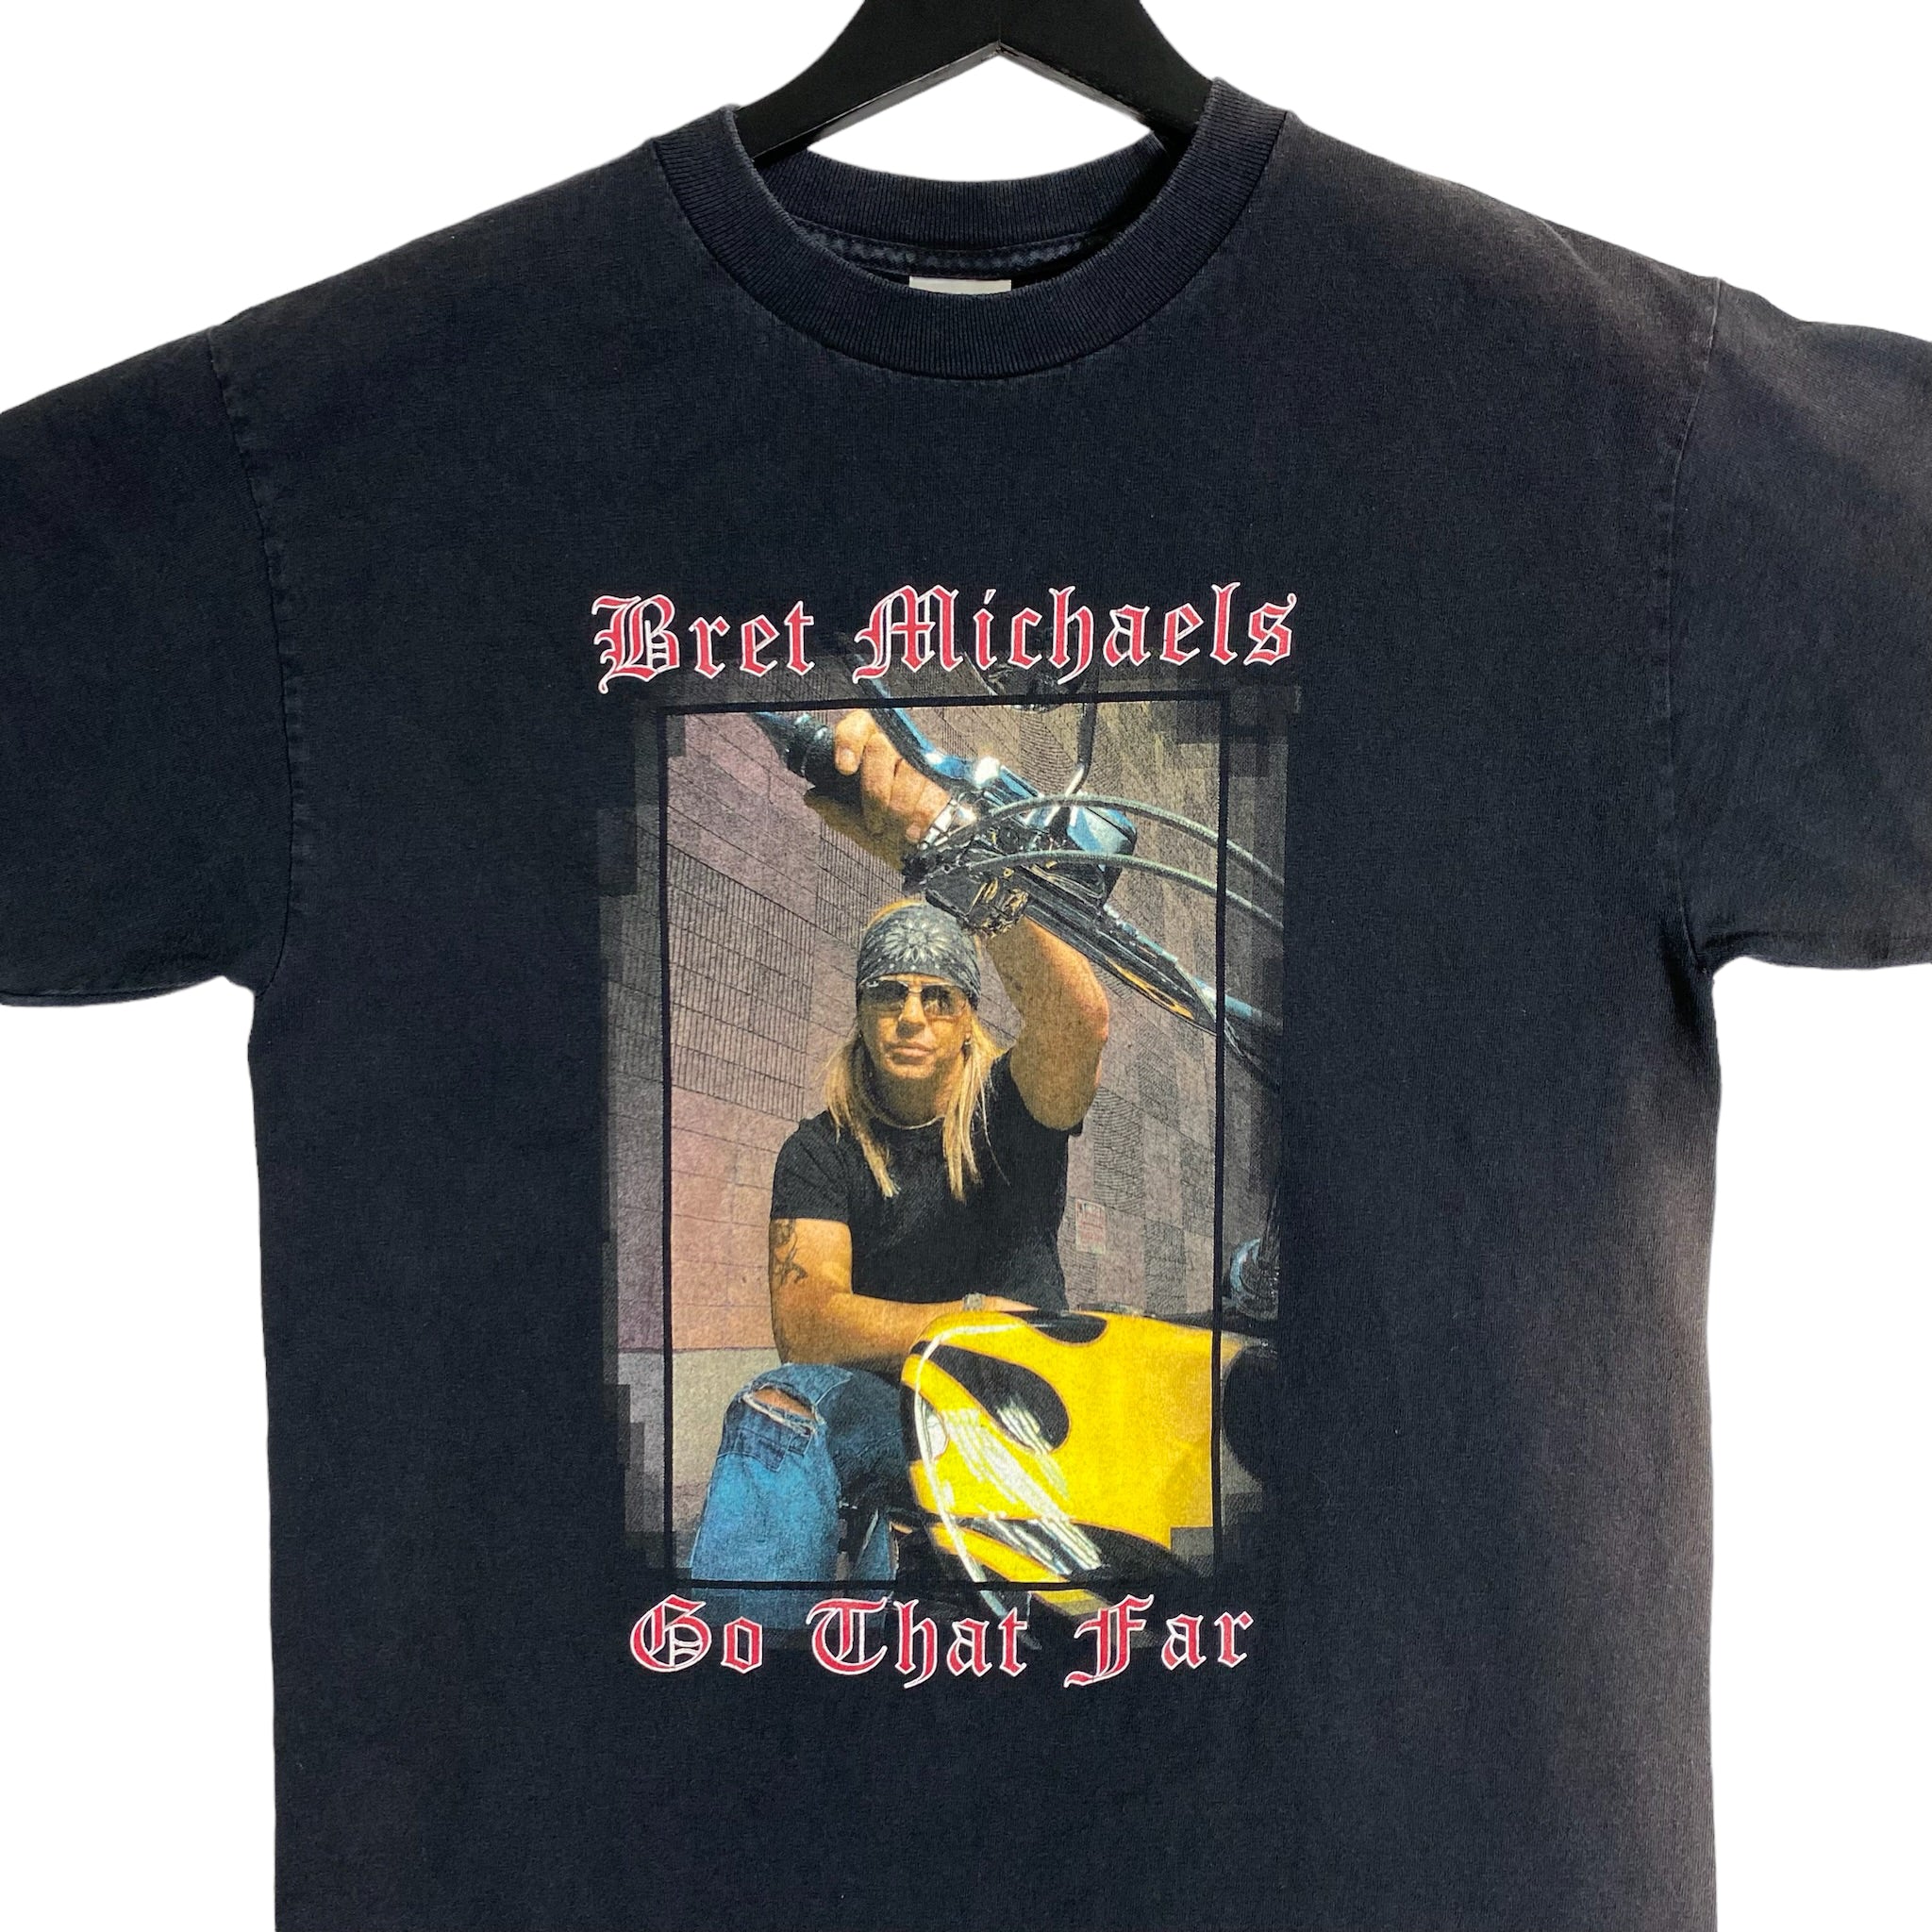 Vintage Bret Michaels "Go That Far" Tee